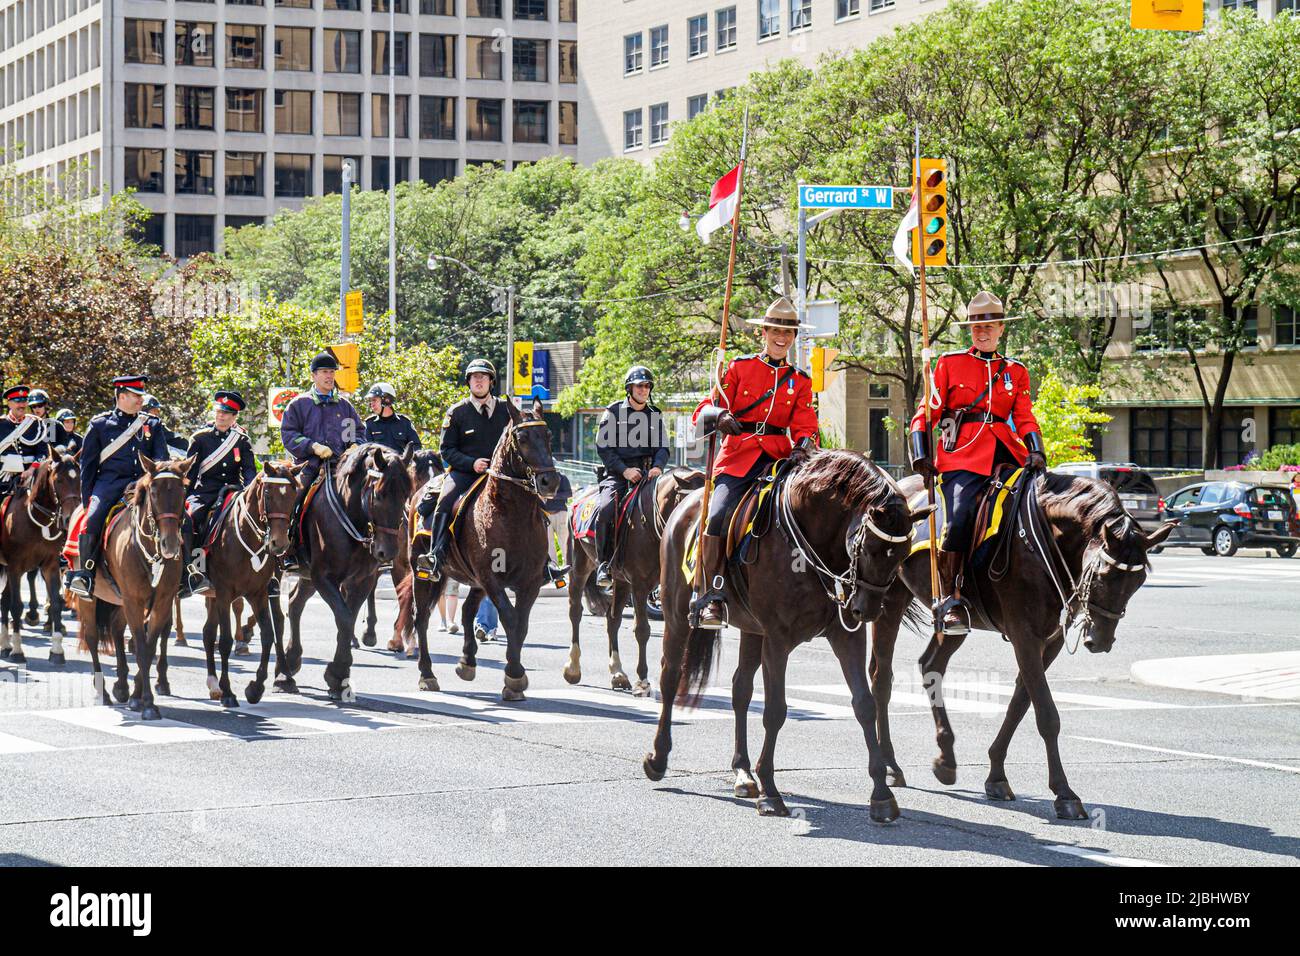 Toronto Kanada, University Avenue, Police Equestrian Day, Royal Canadian Mounted Police, Mounties, Pferde Parade Drill Team Offiziere Männer männliche Uniformen Stockfoto